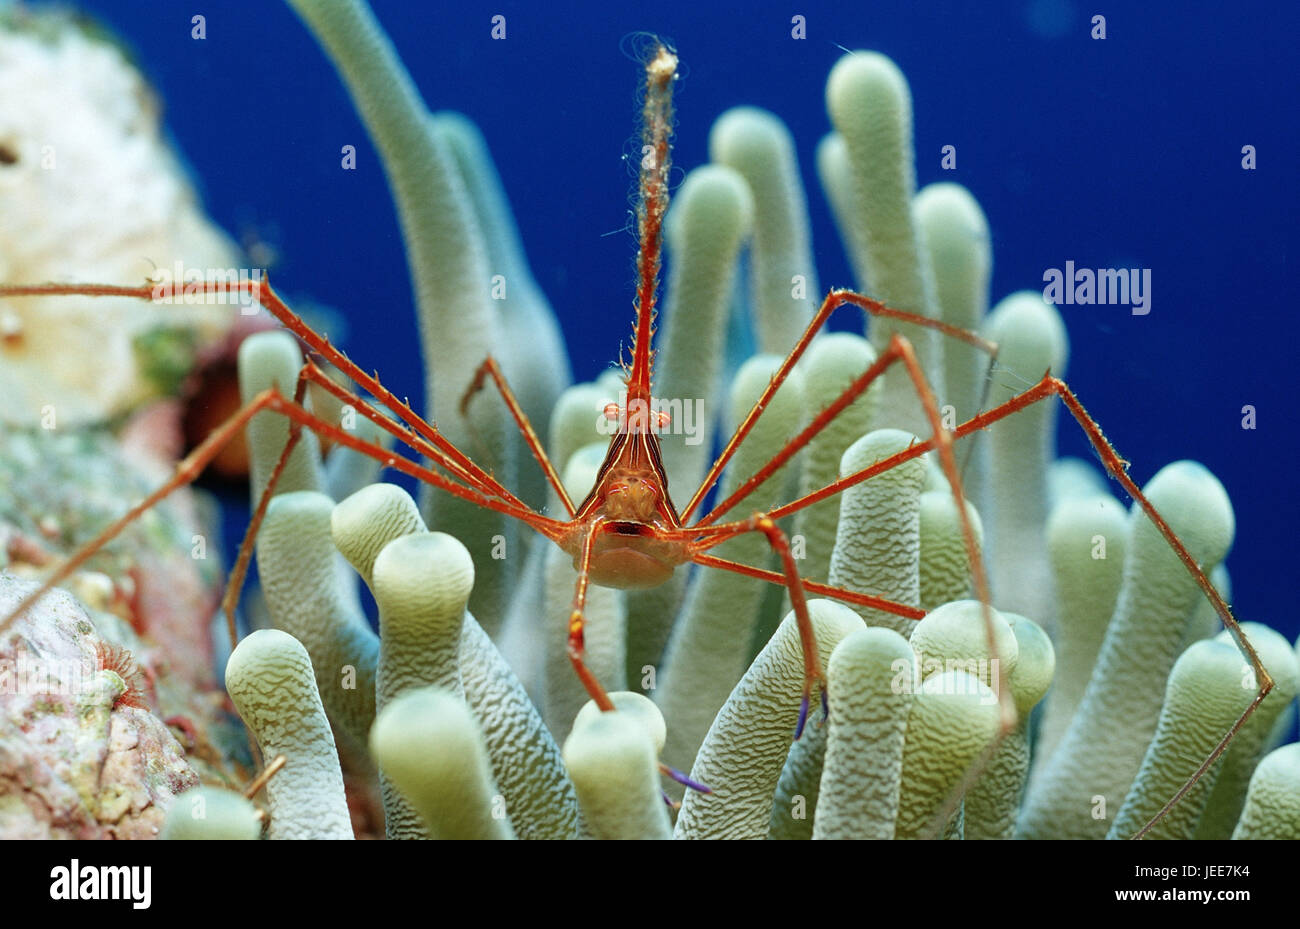 Spinning crab, Stenorhynchus seticornis, anemone, the Caribbean, Stock Photo